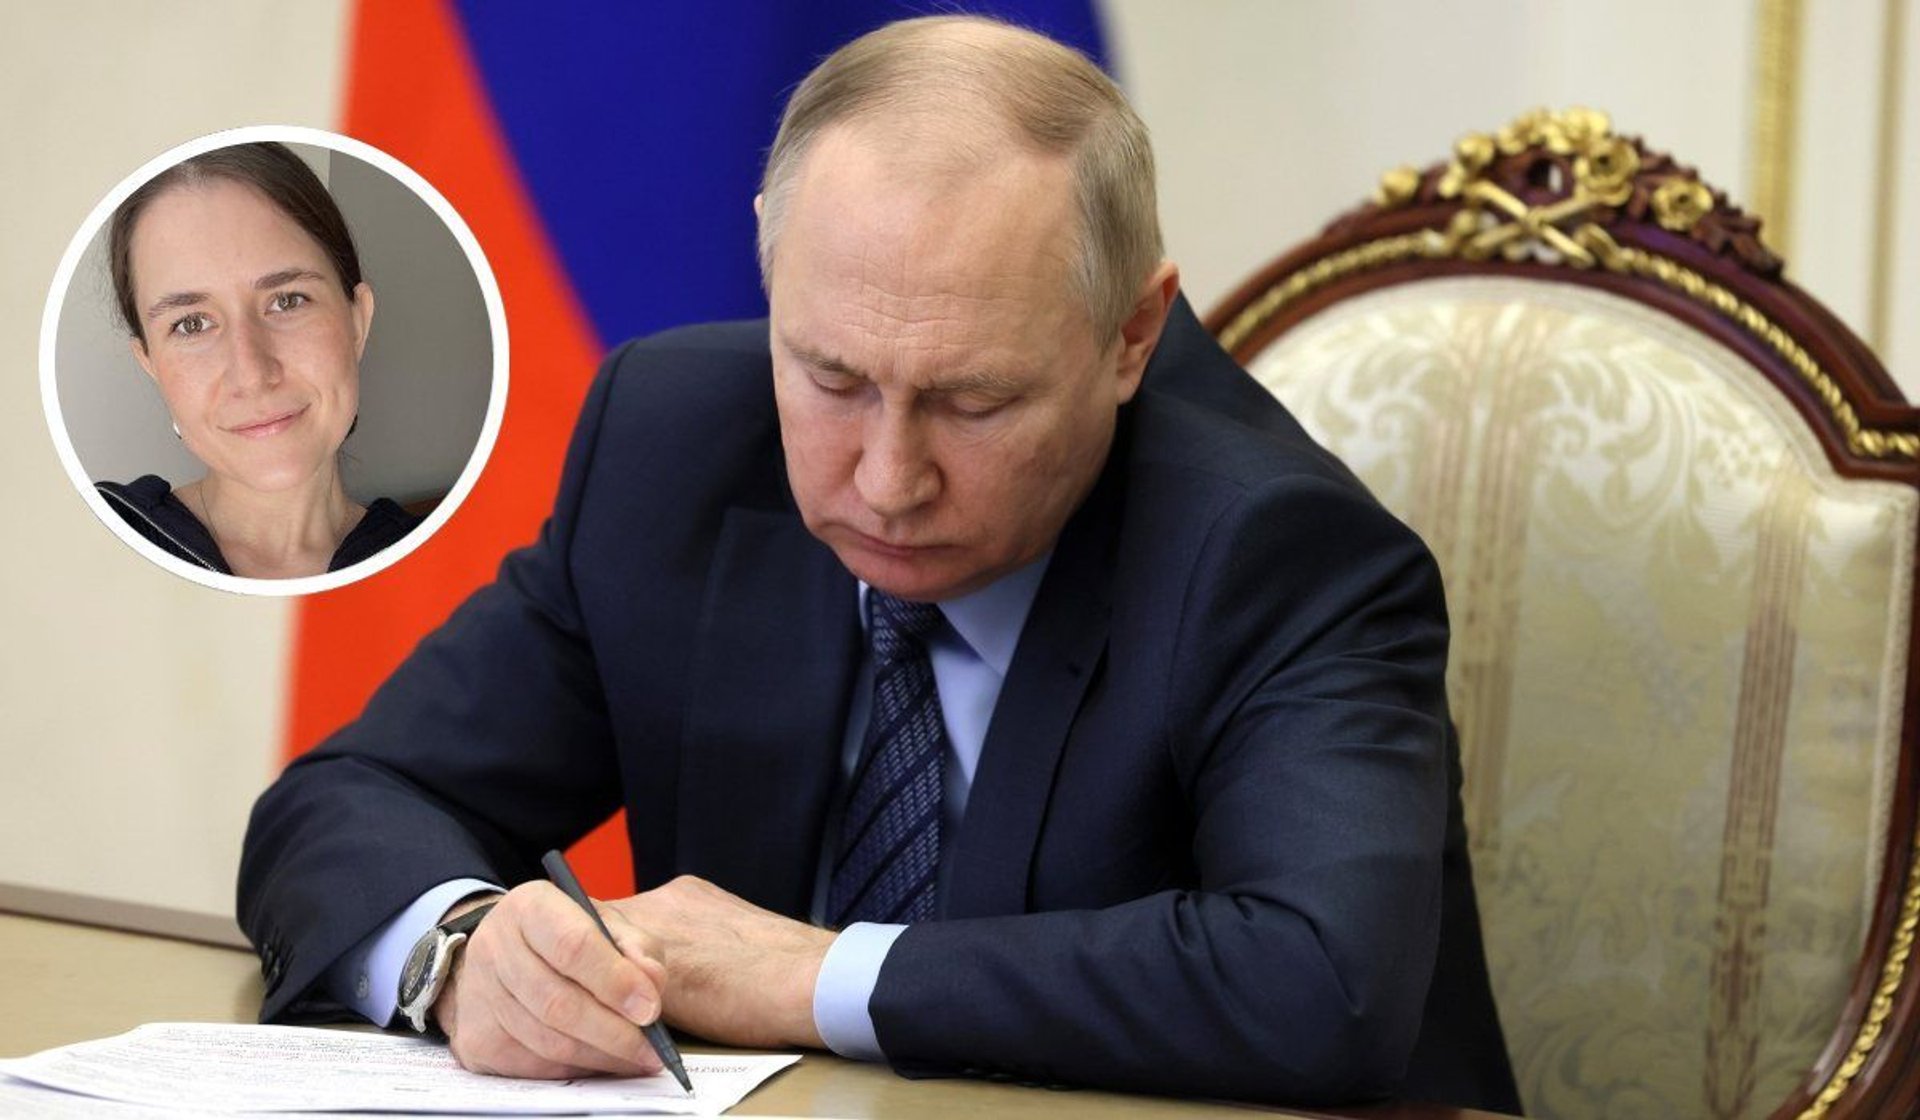 Trafiła na czarną listę Putina